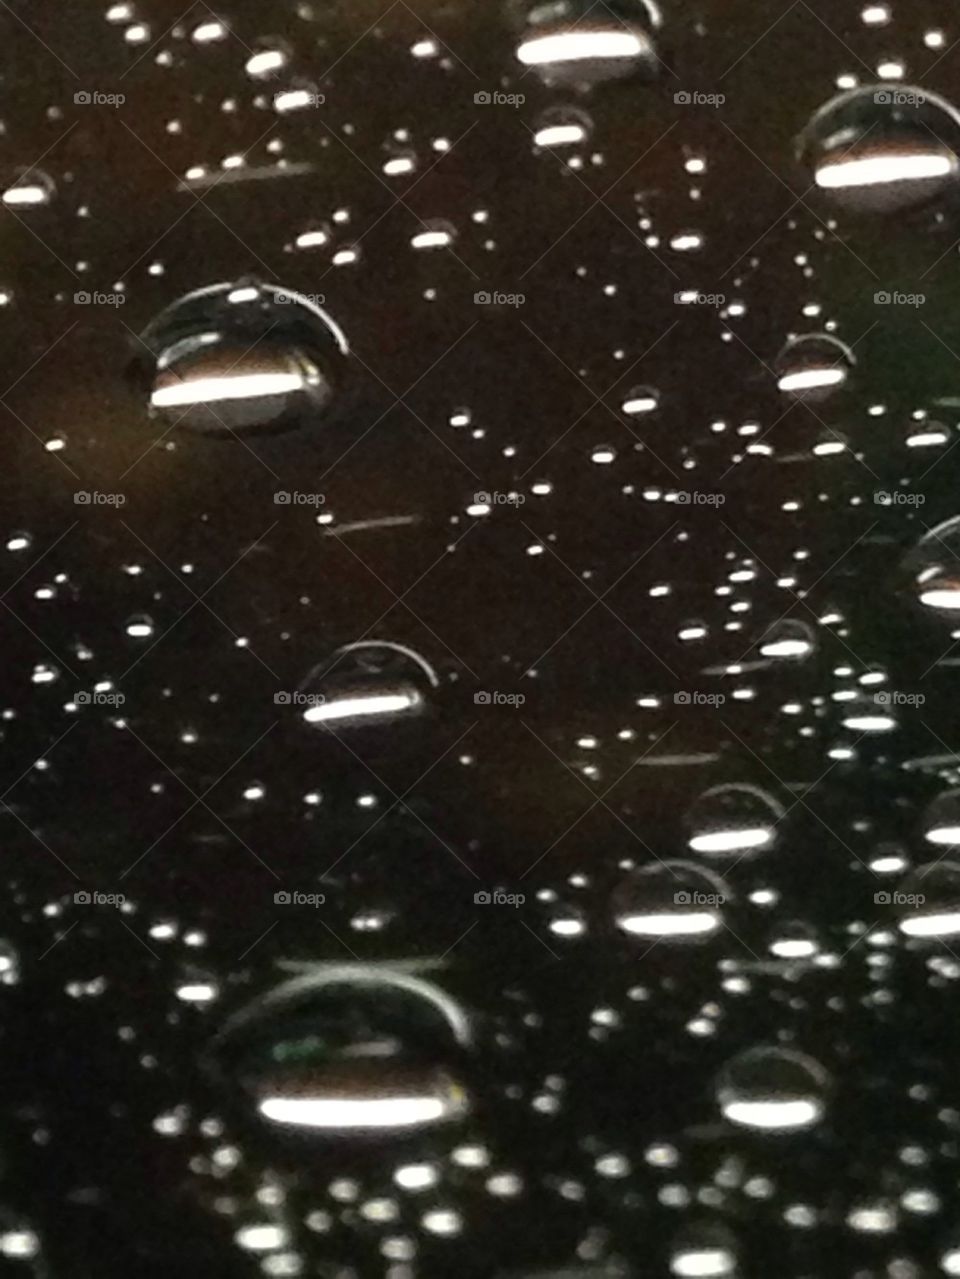 Rain drops on the windshield at night